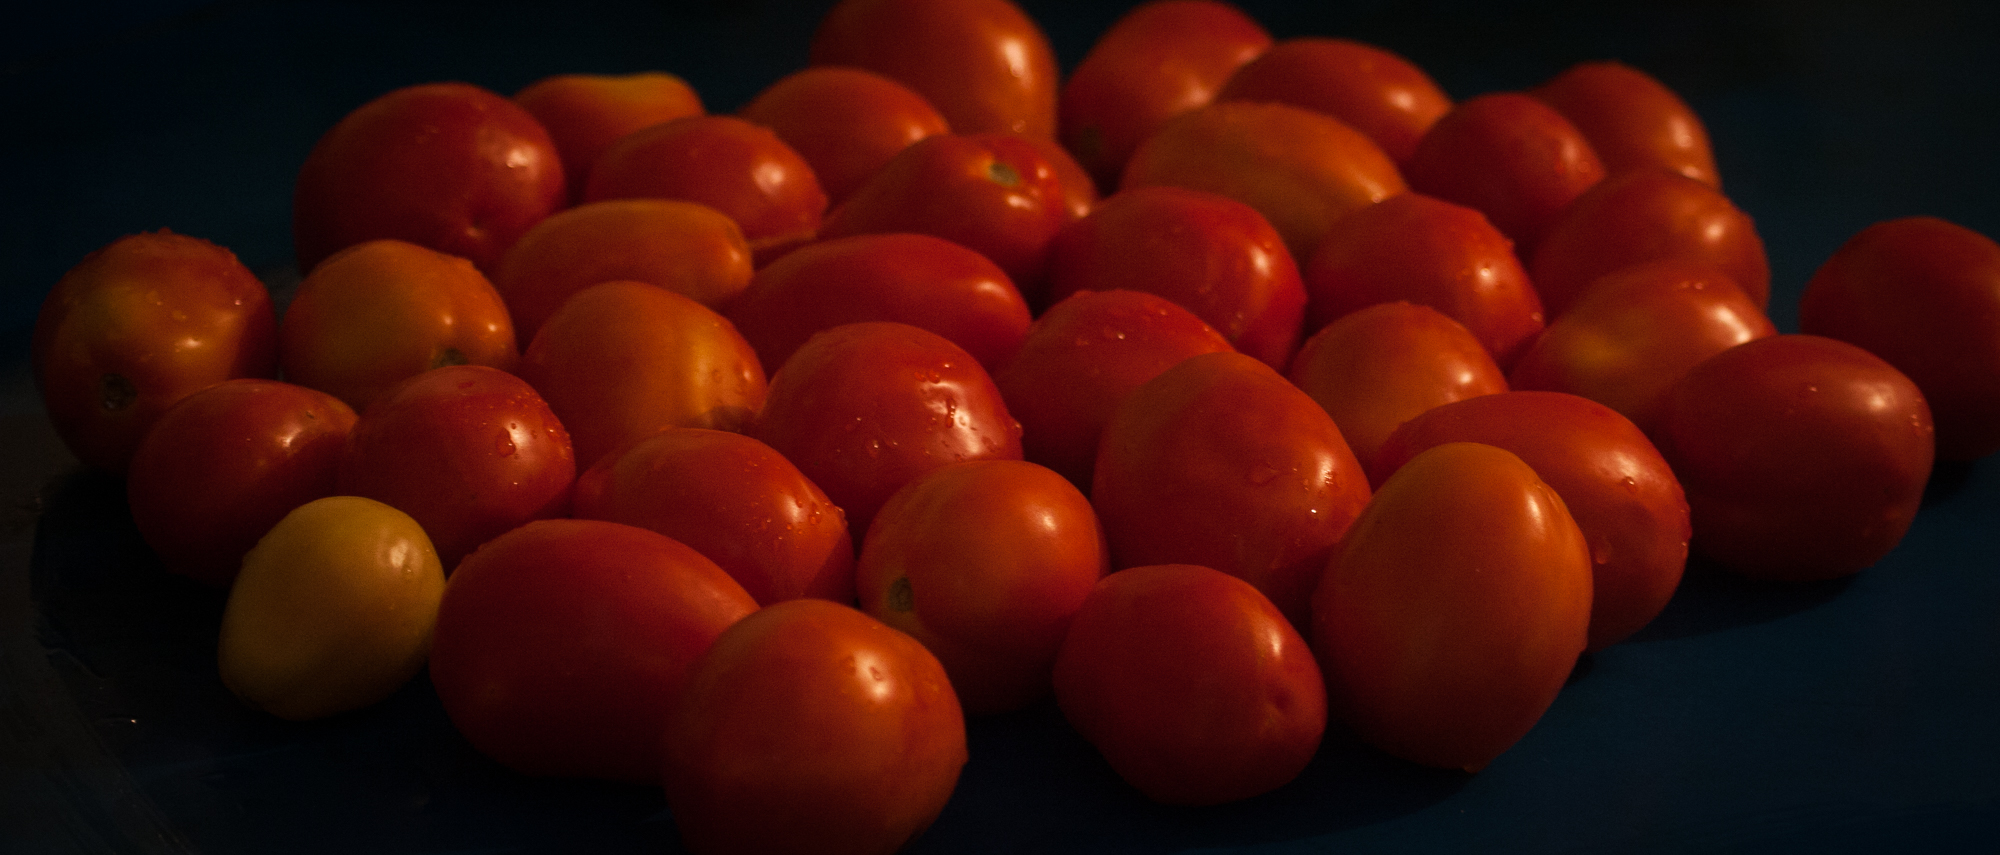 Recetas #46 🍅Salsa de tomates. Pollo a la parmesana. 🍅Recipes # 46 Tomato sauce